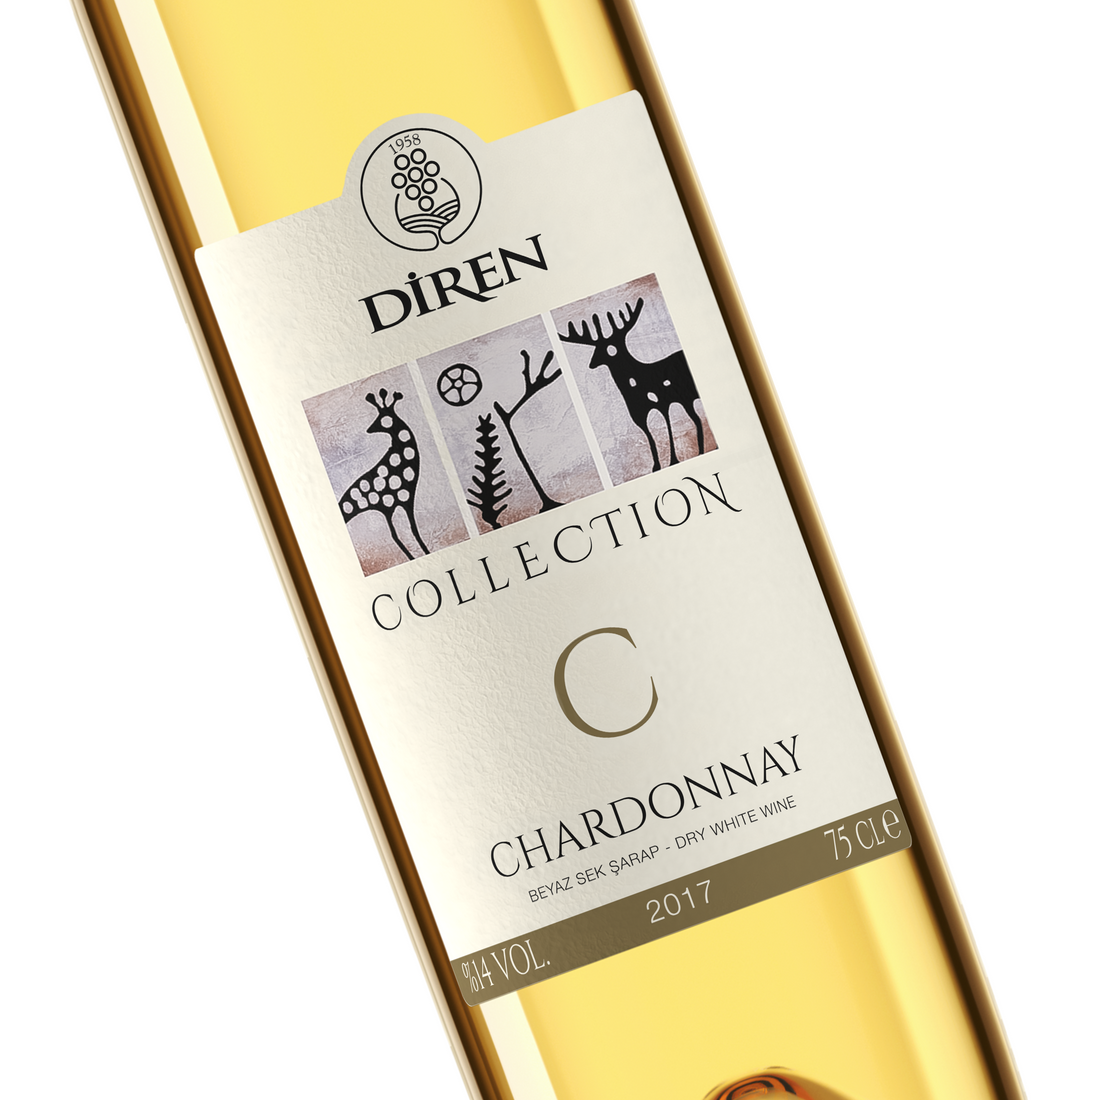 Diren Collection Chardonnay 750ml Dry Turkish White Wine | Diren Collection Chardonnay Beyaz Sek Sarap | Dry White Wine